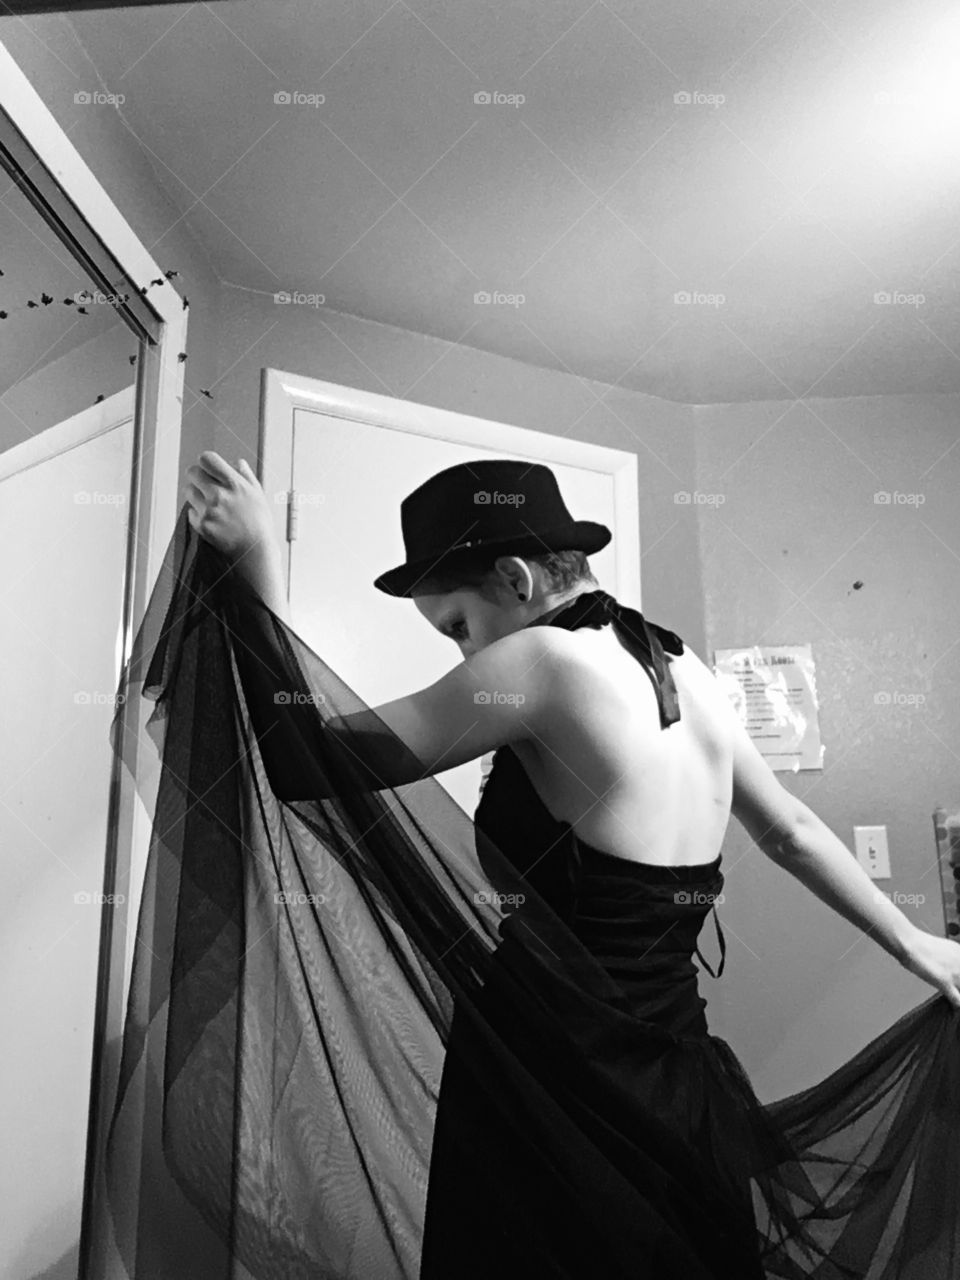 Stevie Nicks inspired photo in black and grey filter